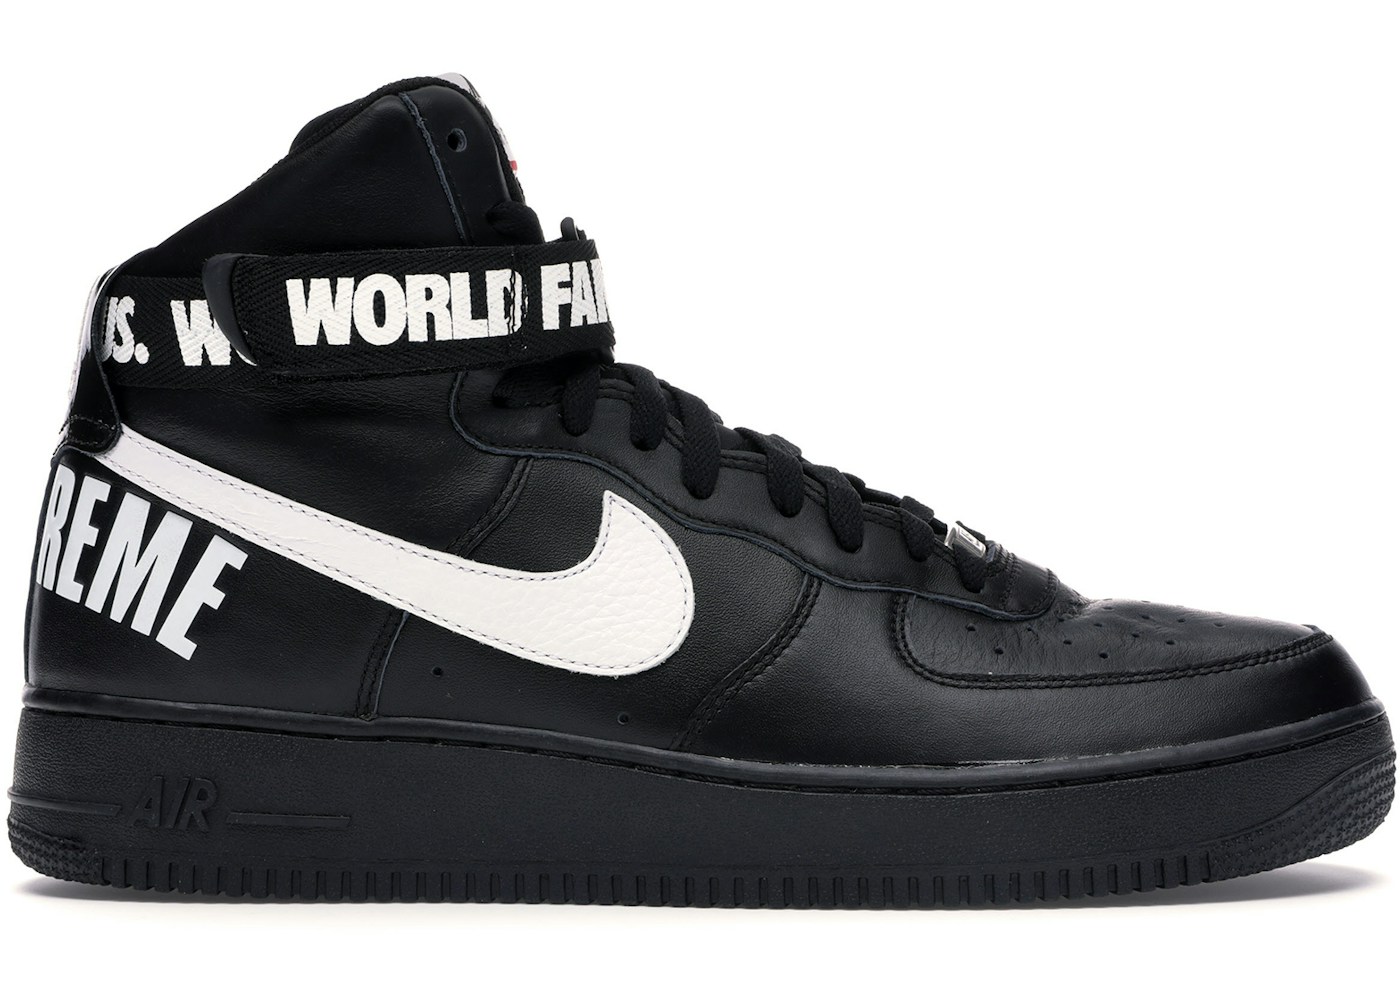 Nike Air Force 1 High Supreme World Famous Black - 698696-010